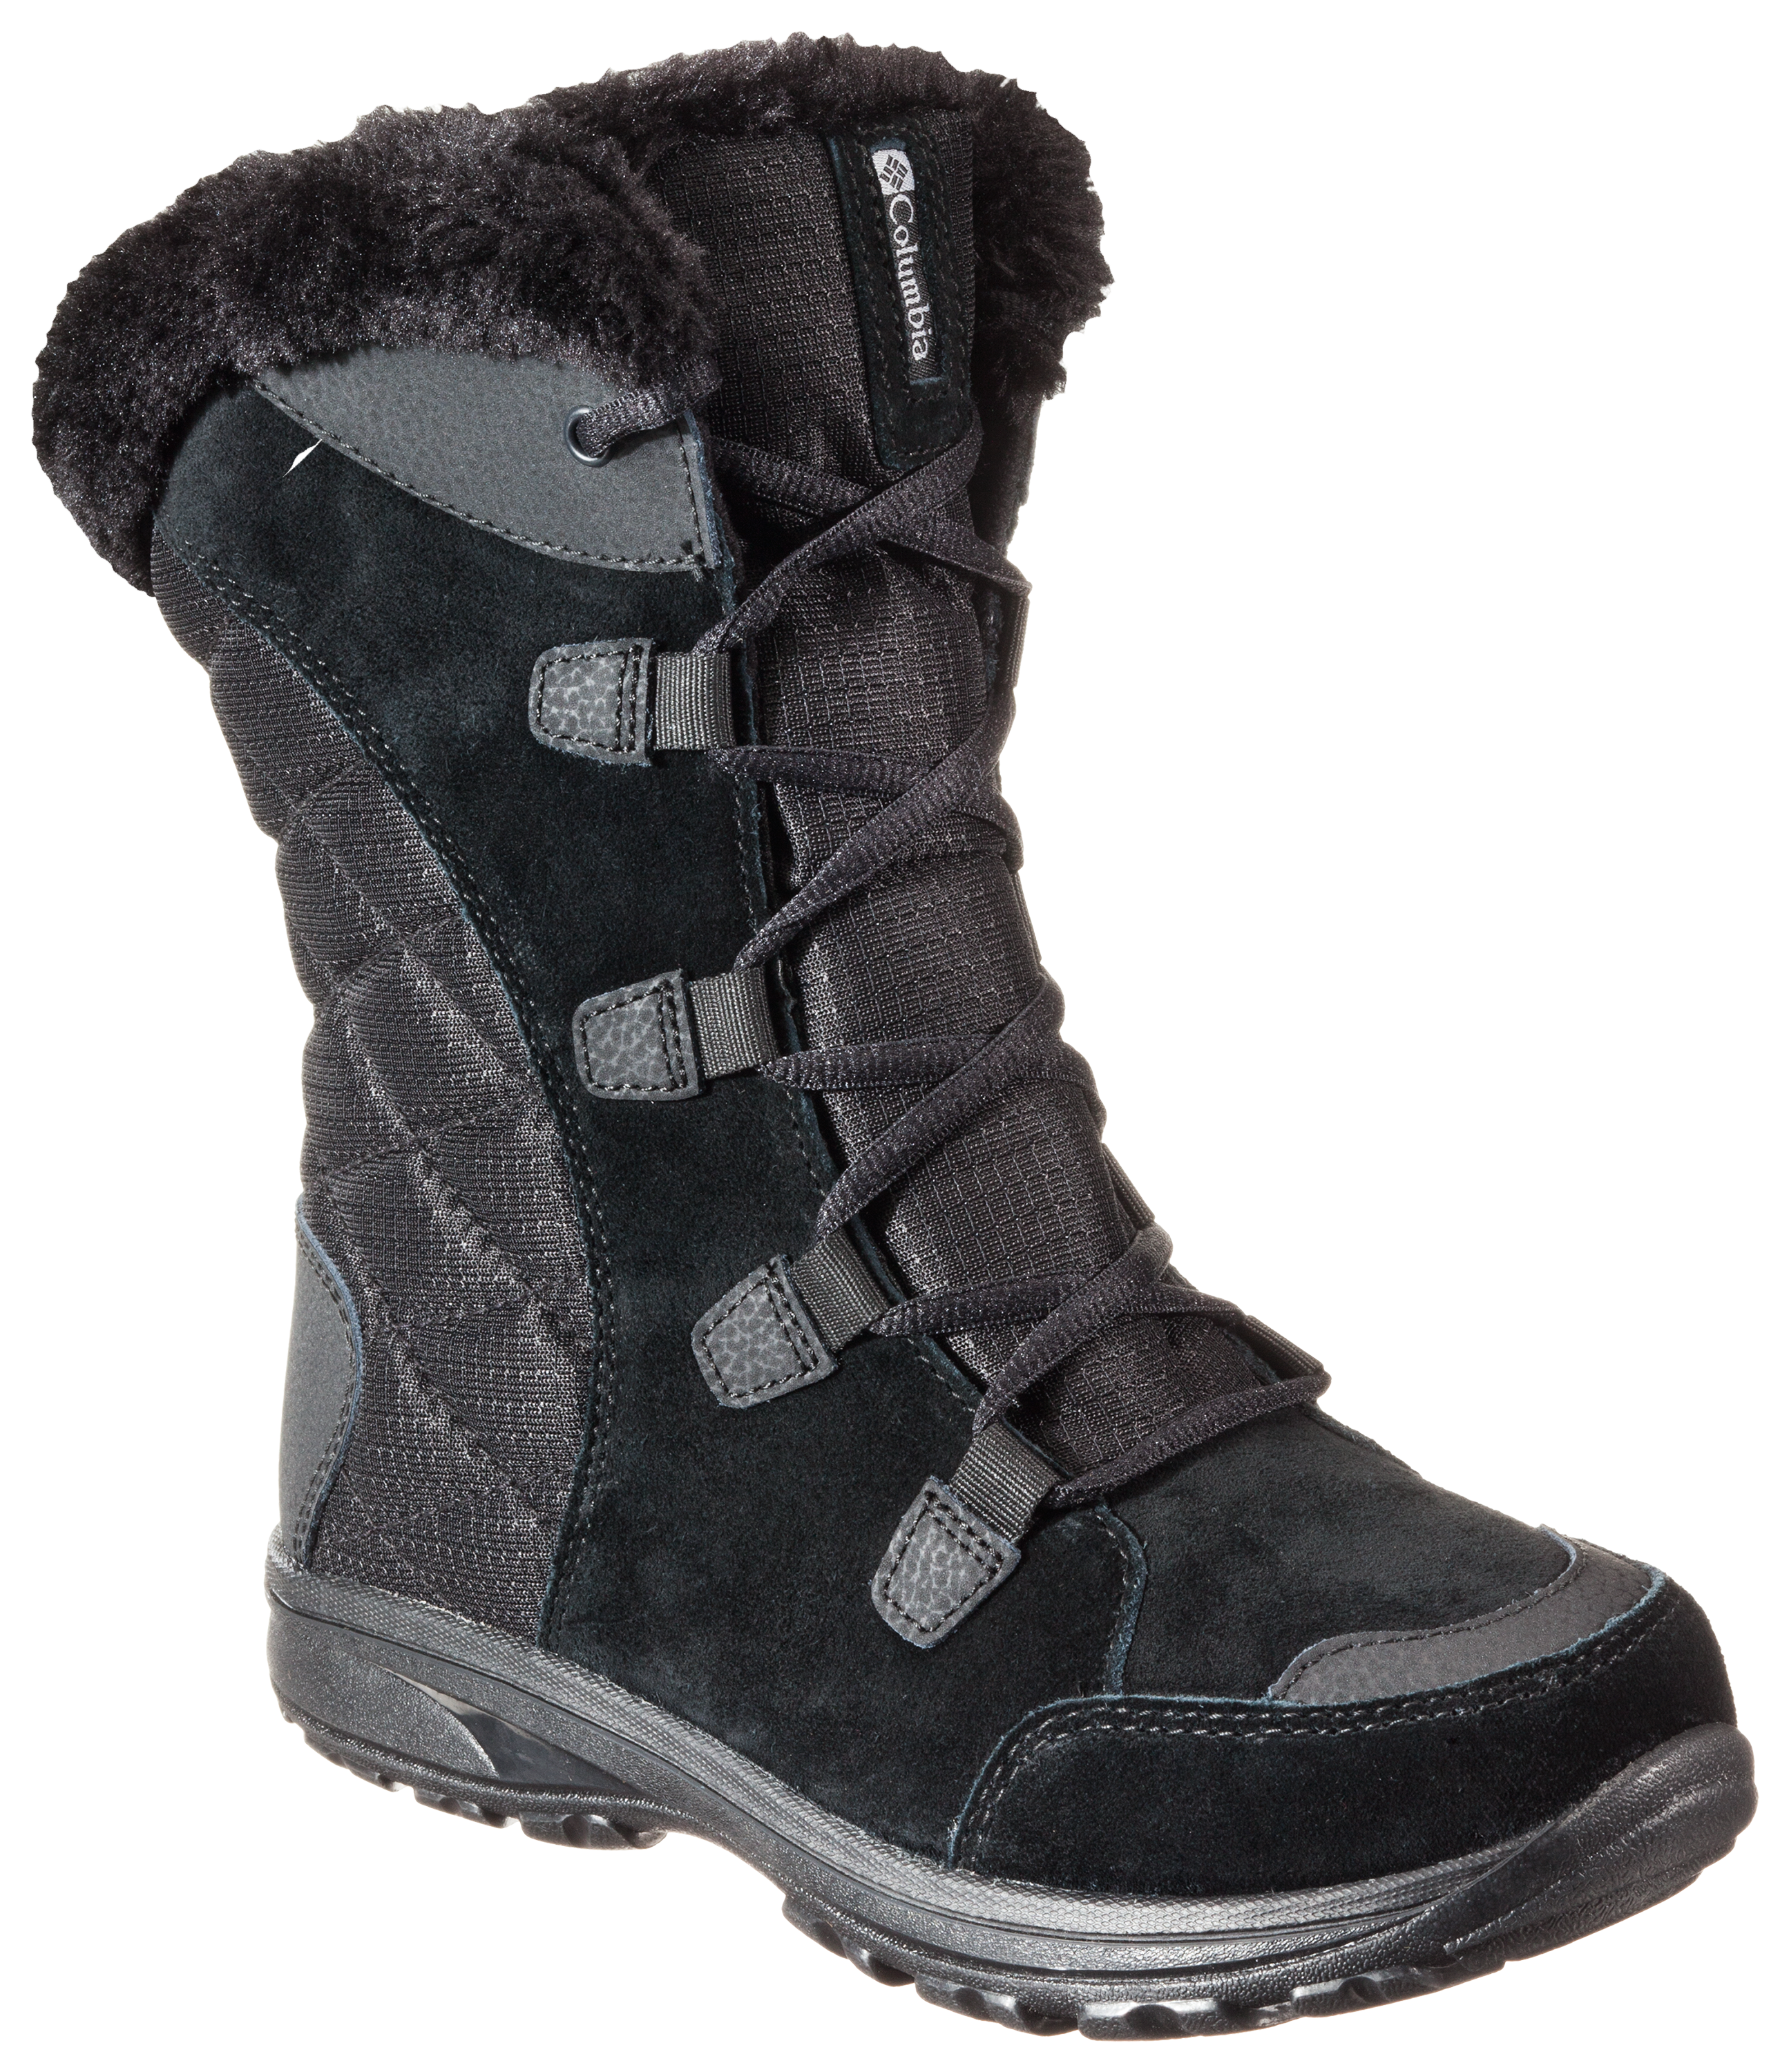  Women's Snow Boots - Columbia / Women's Snow Boots